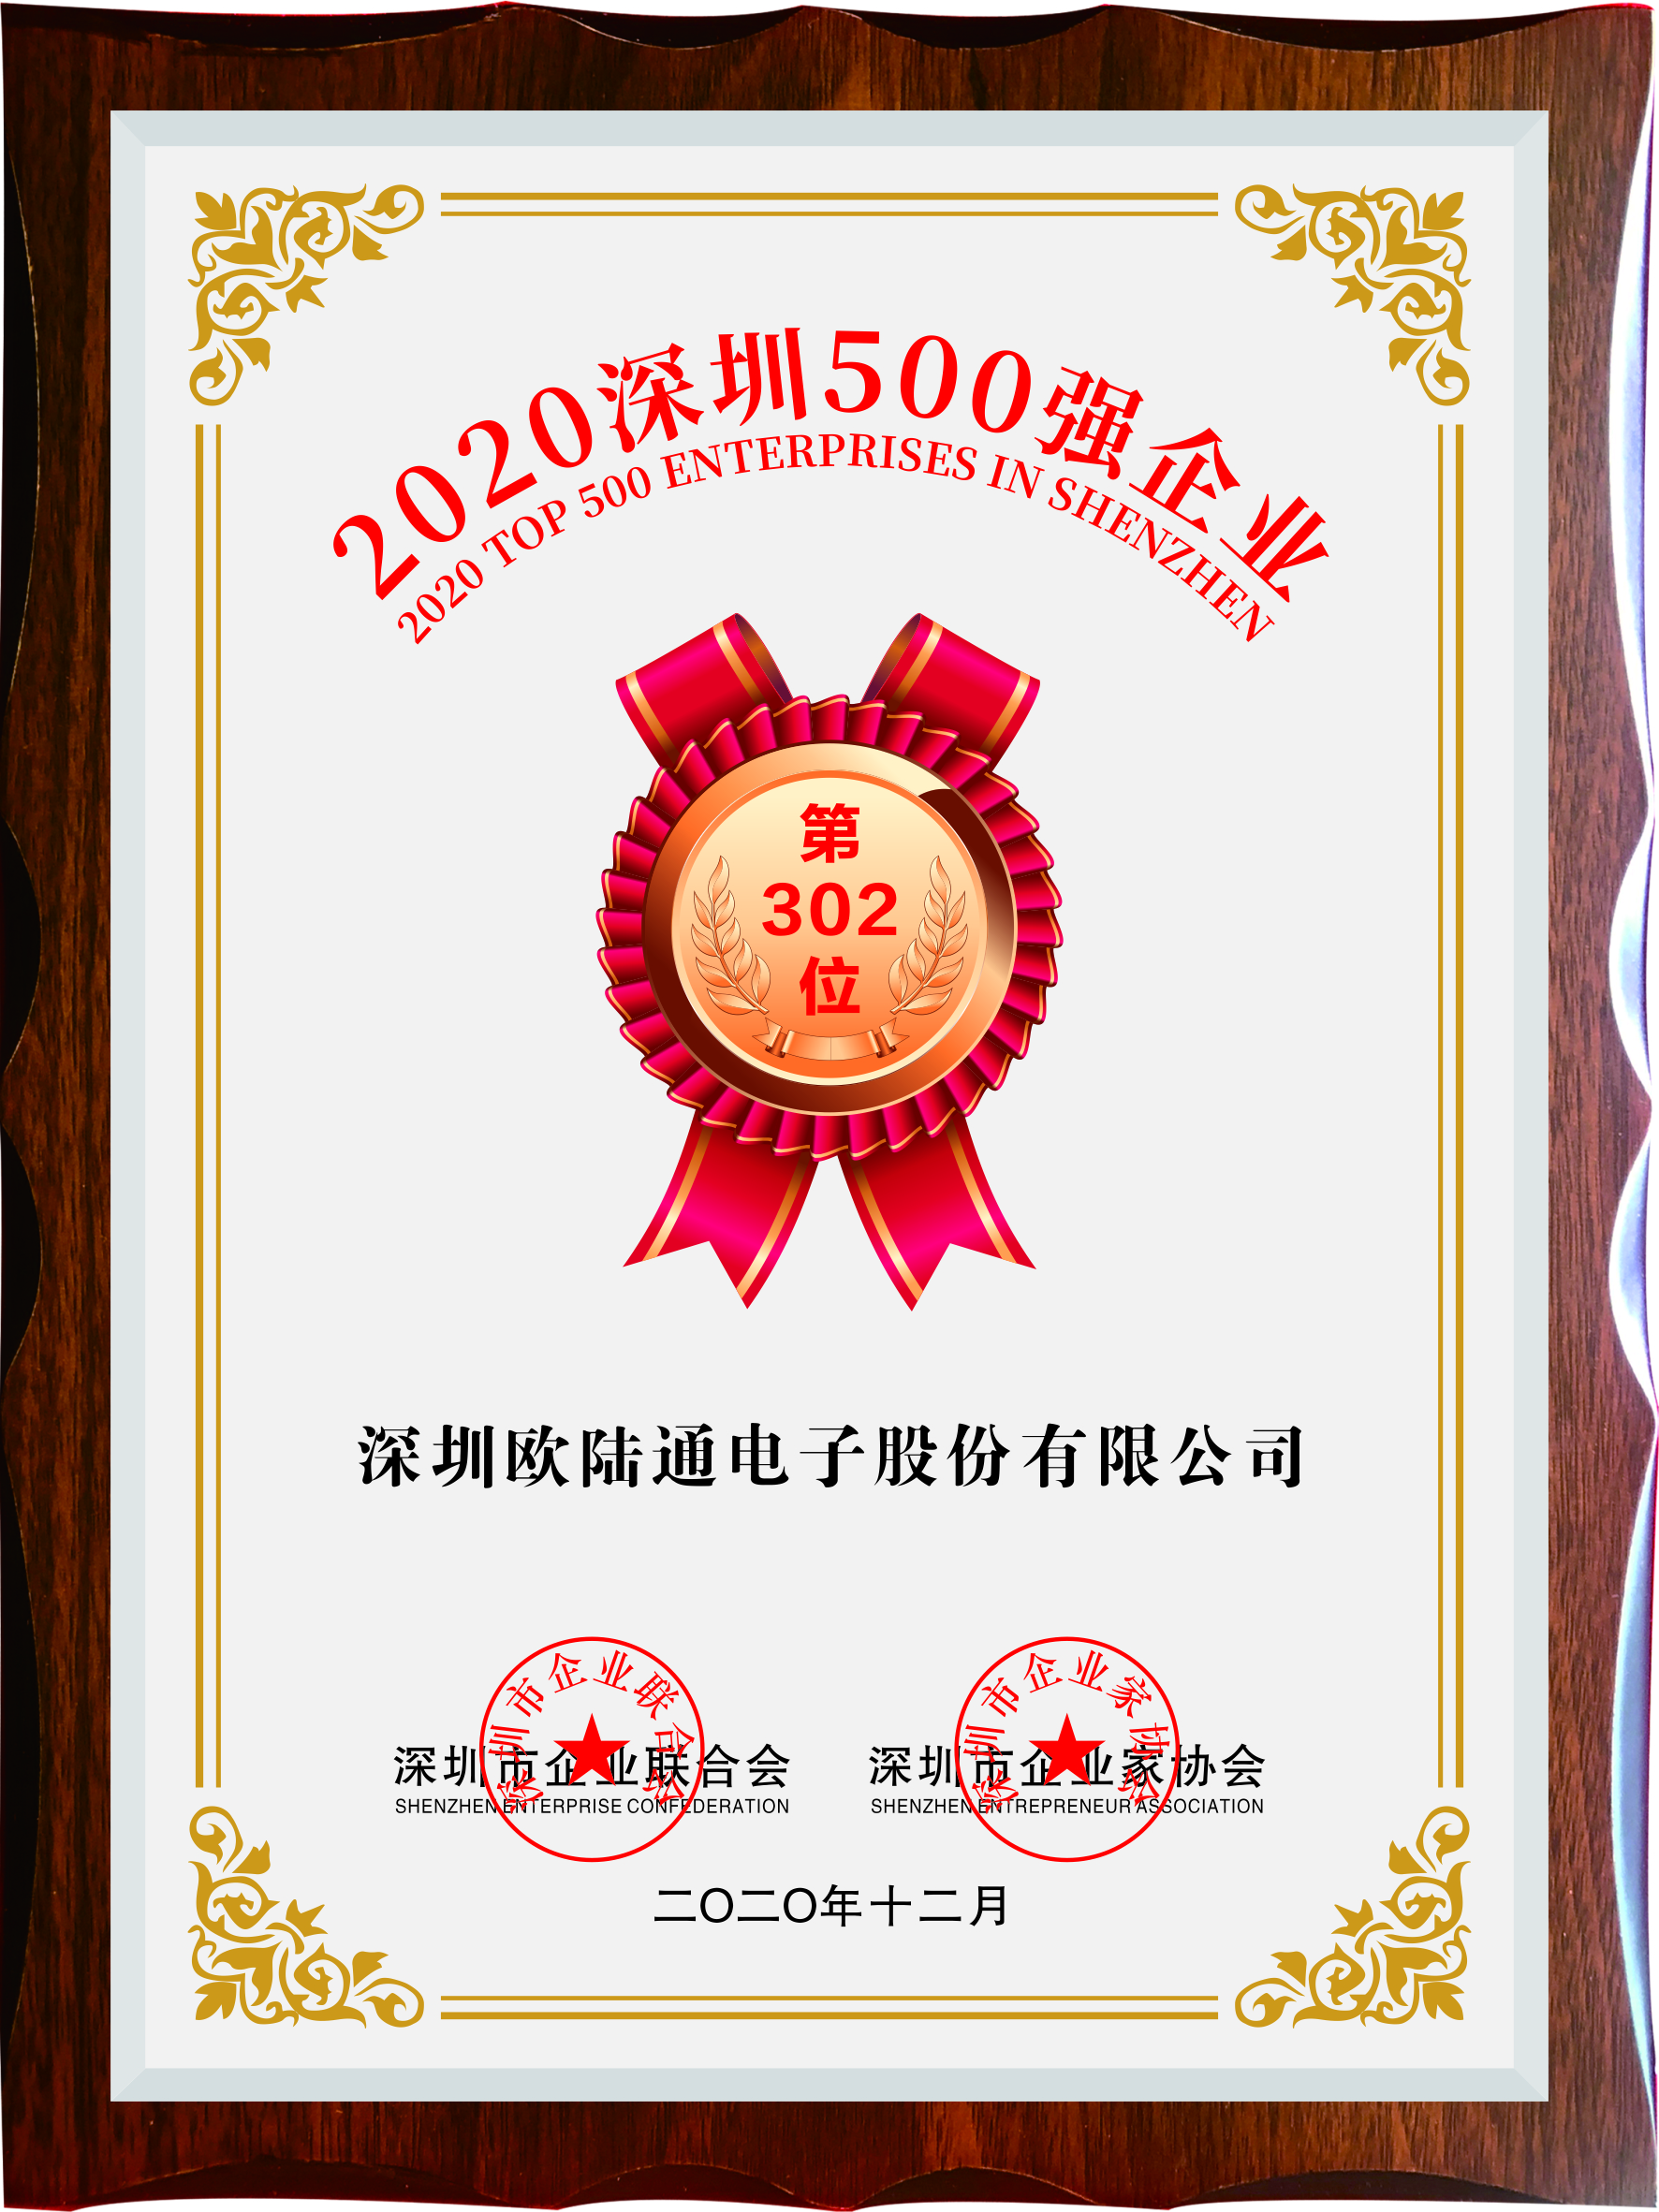 2020 Shenzhen Top 500 Enterprises